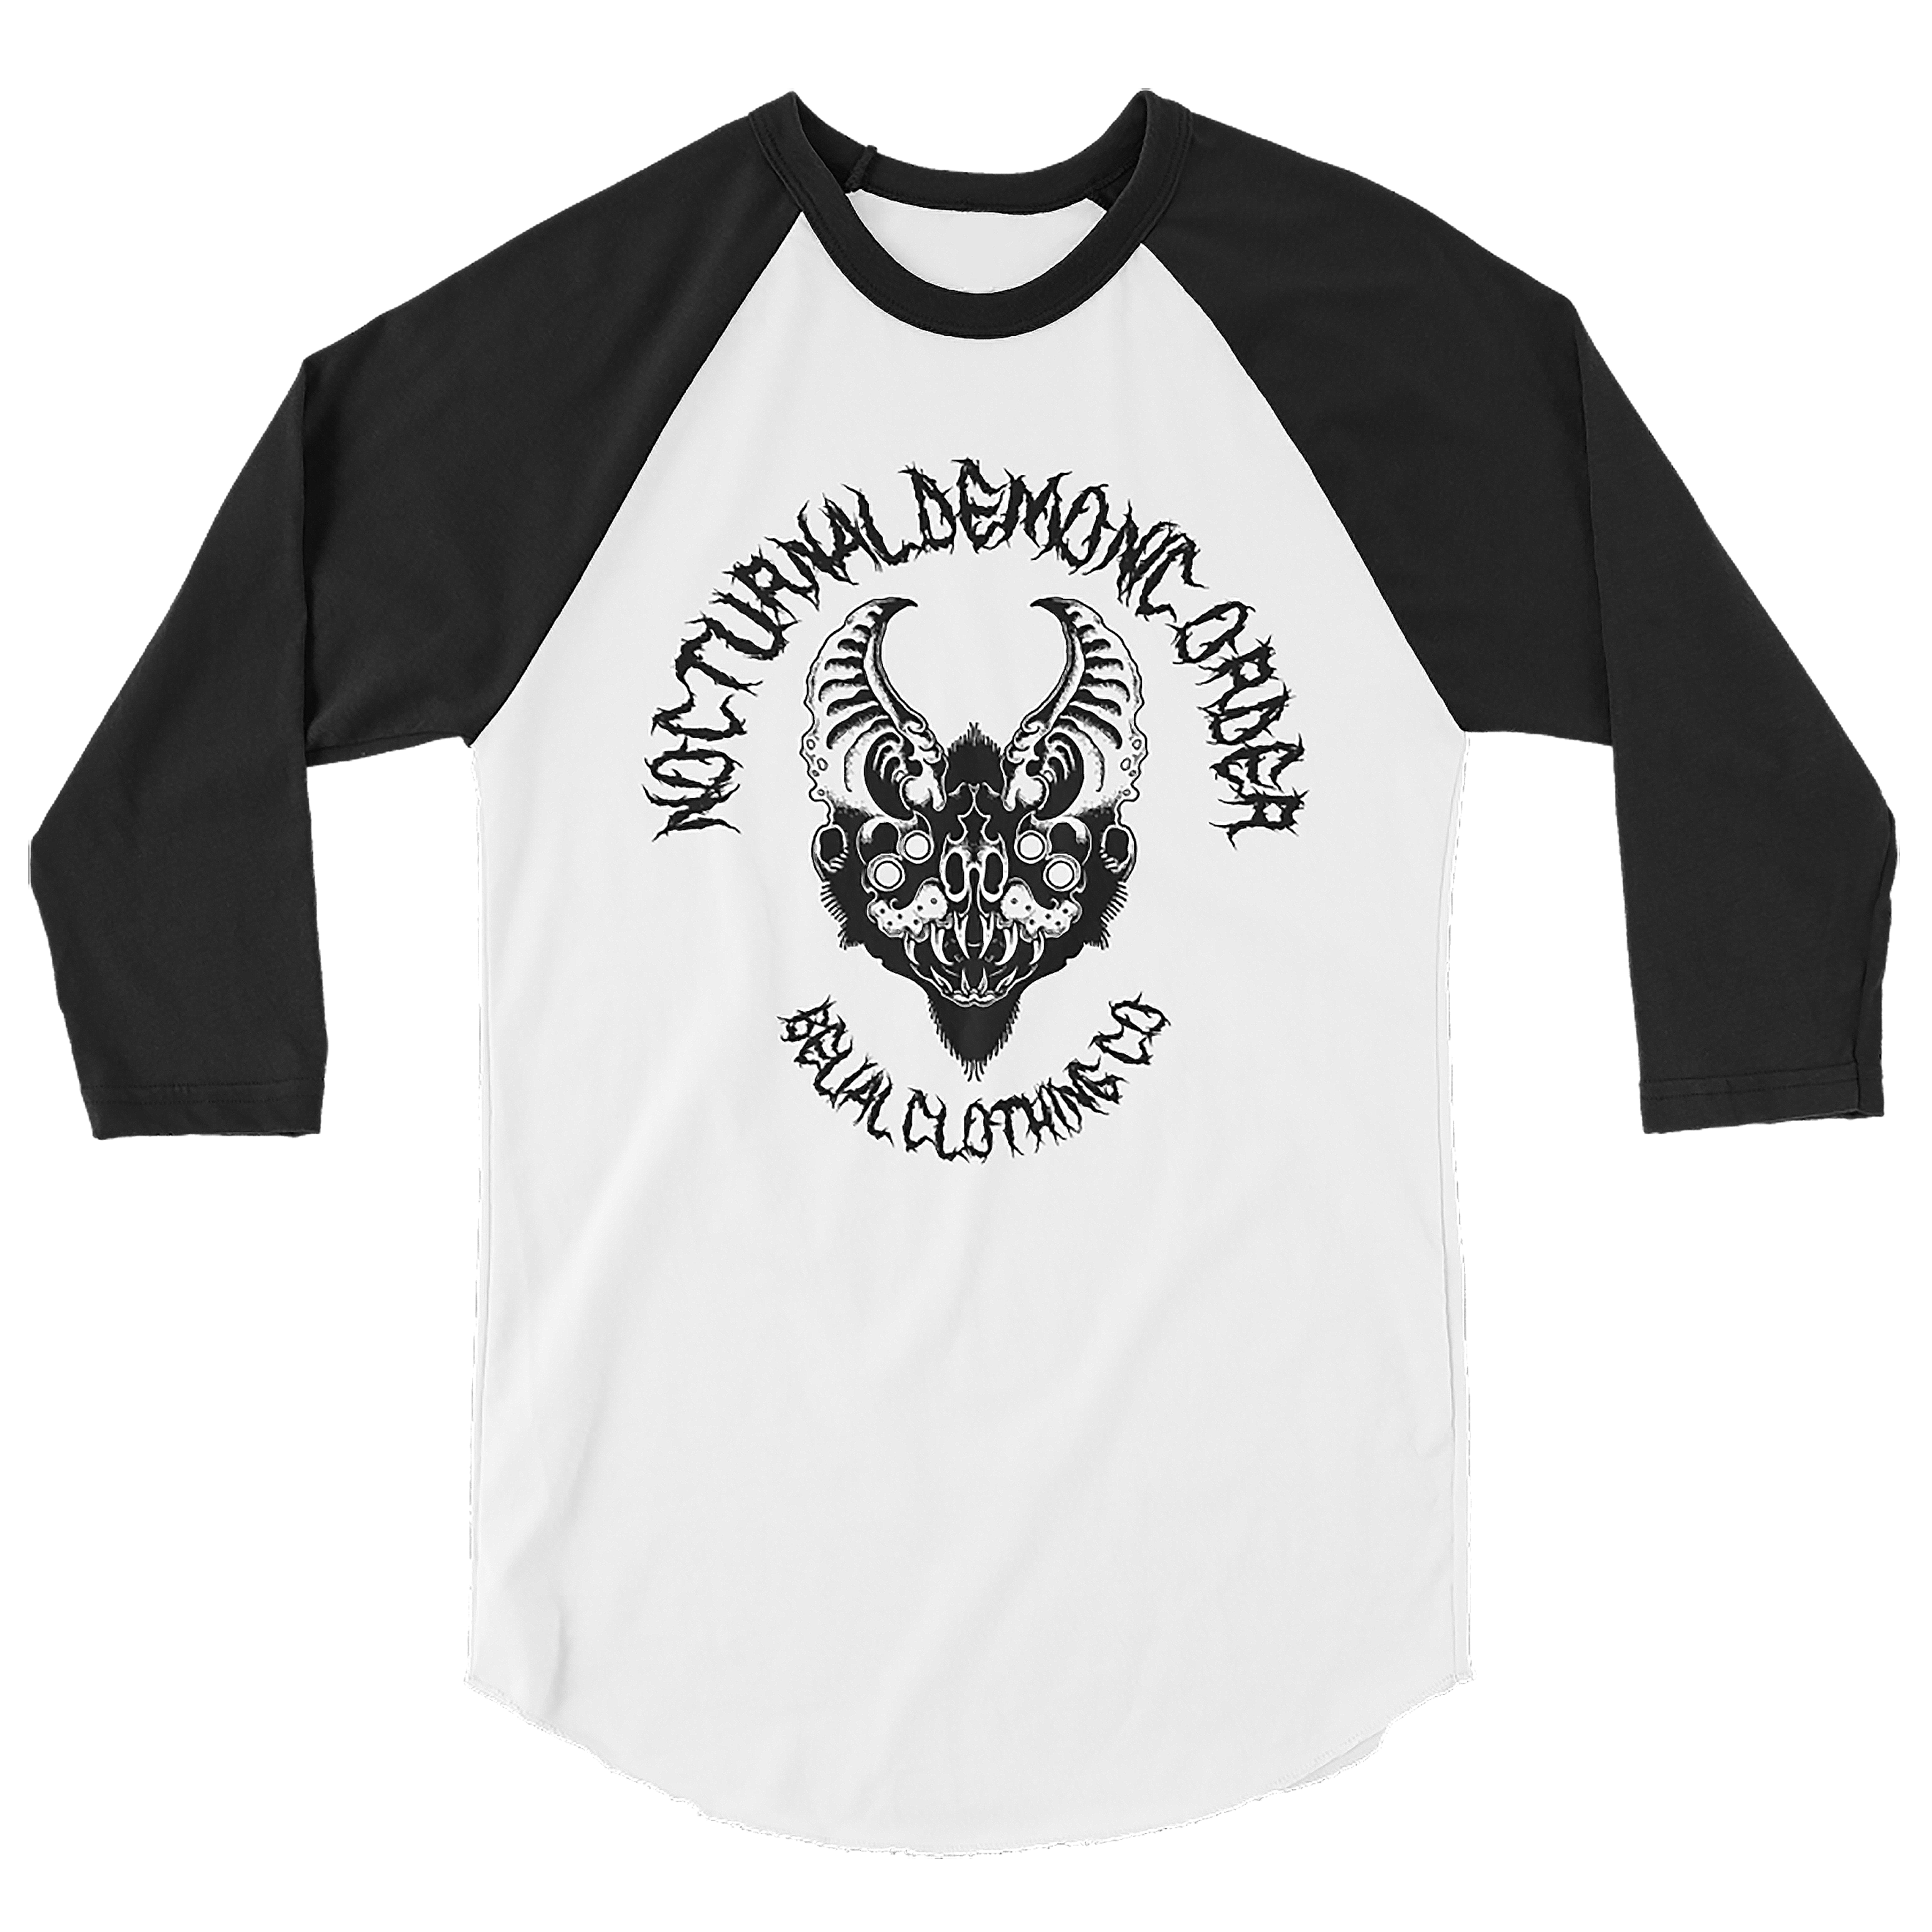 Nocturnal Demonic Order 3/4 sleeve raglan shirt